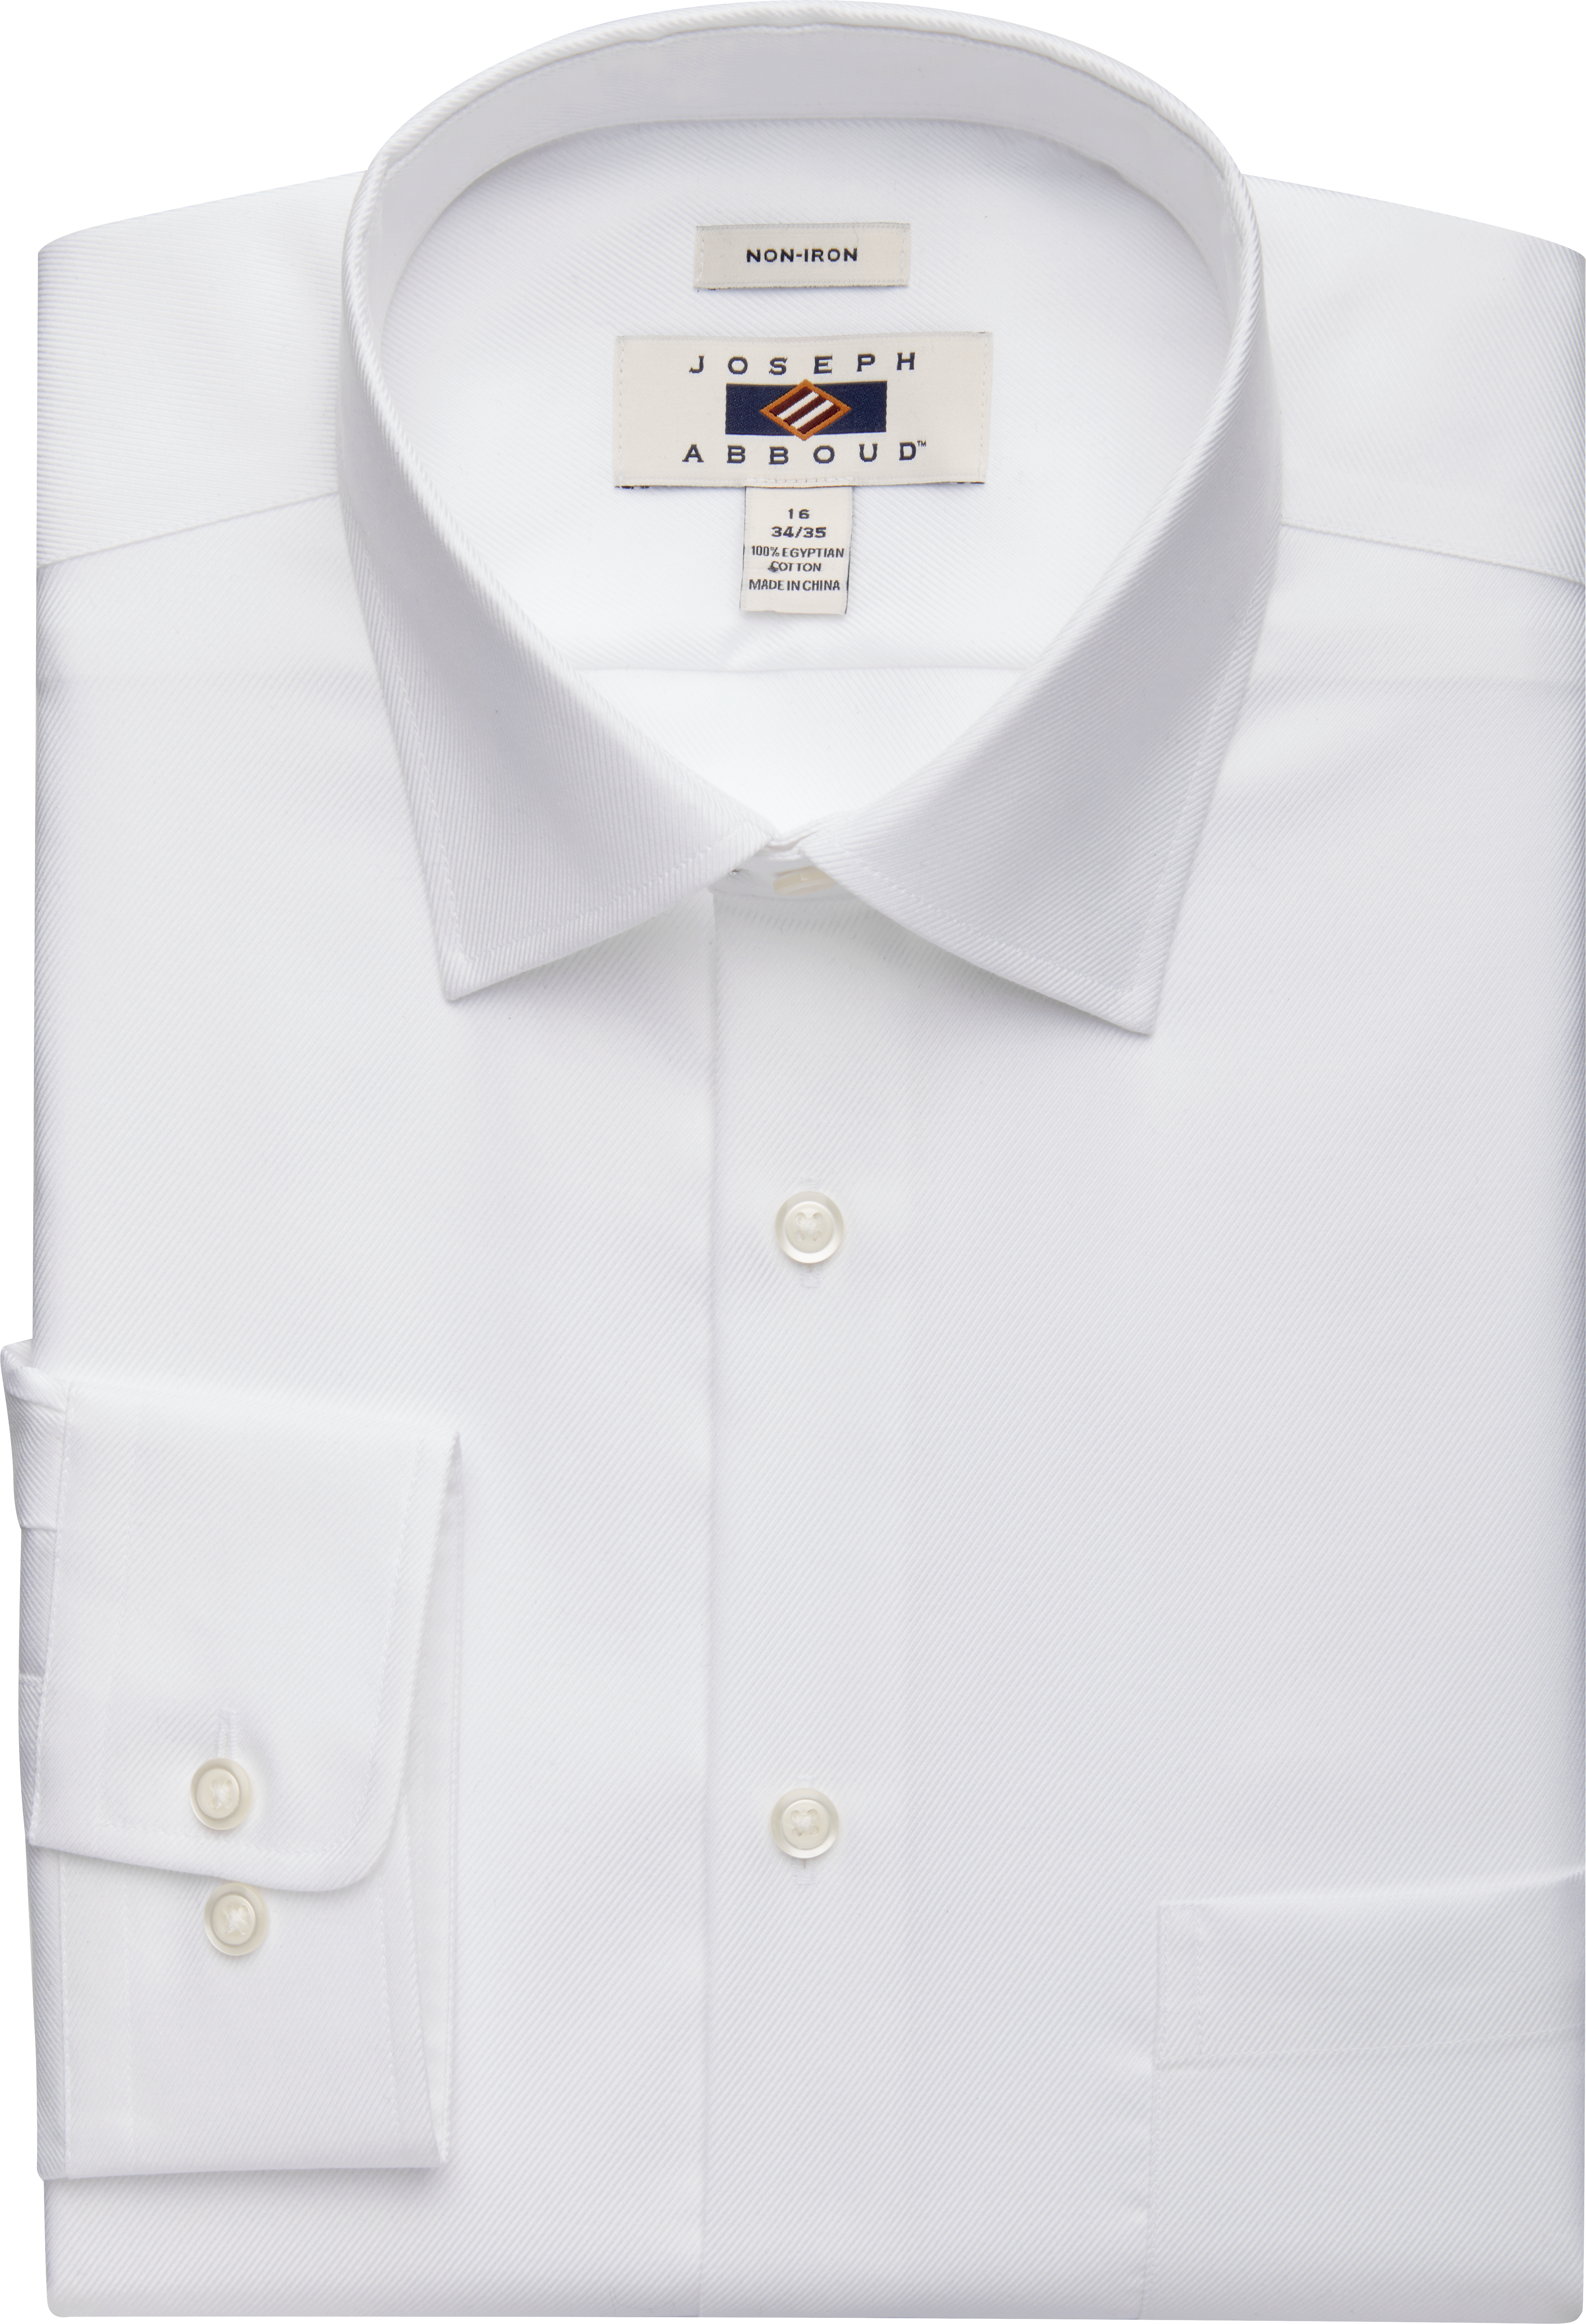 men's wearhouse white dress shirt